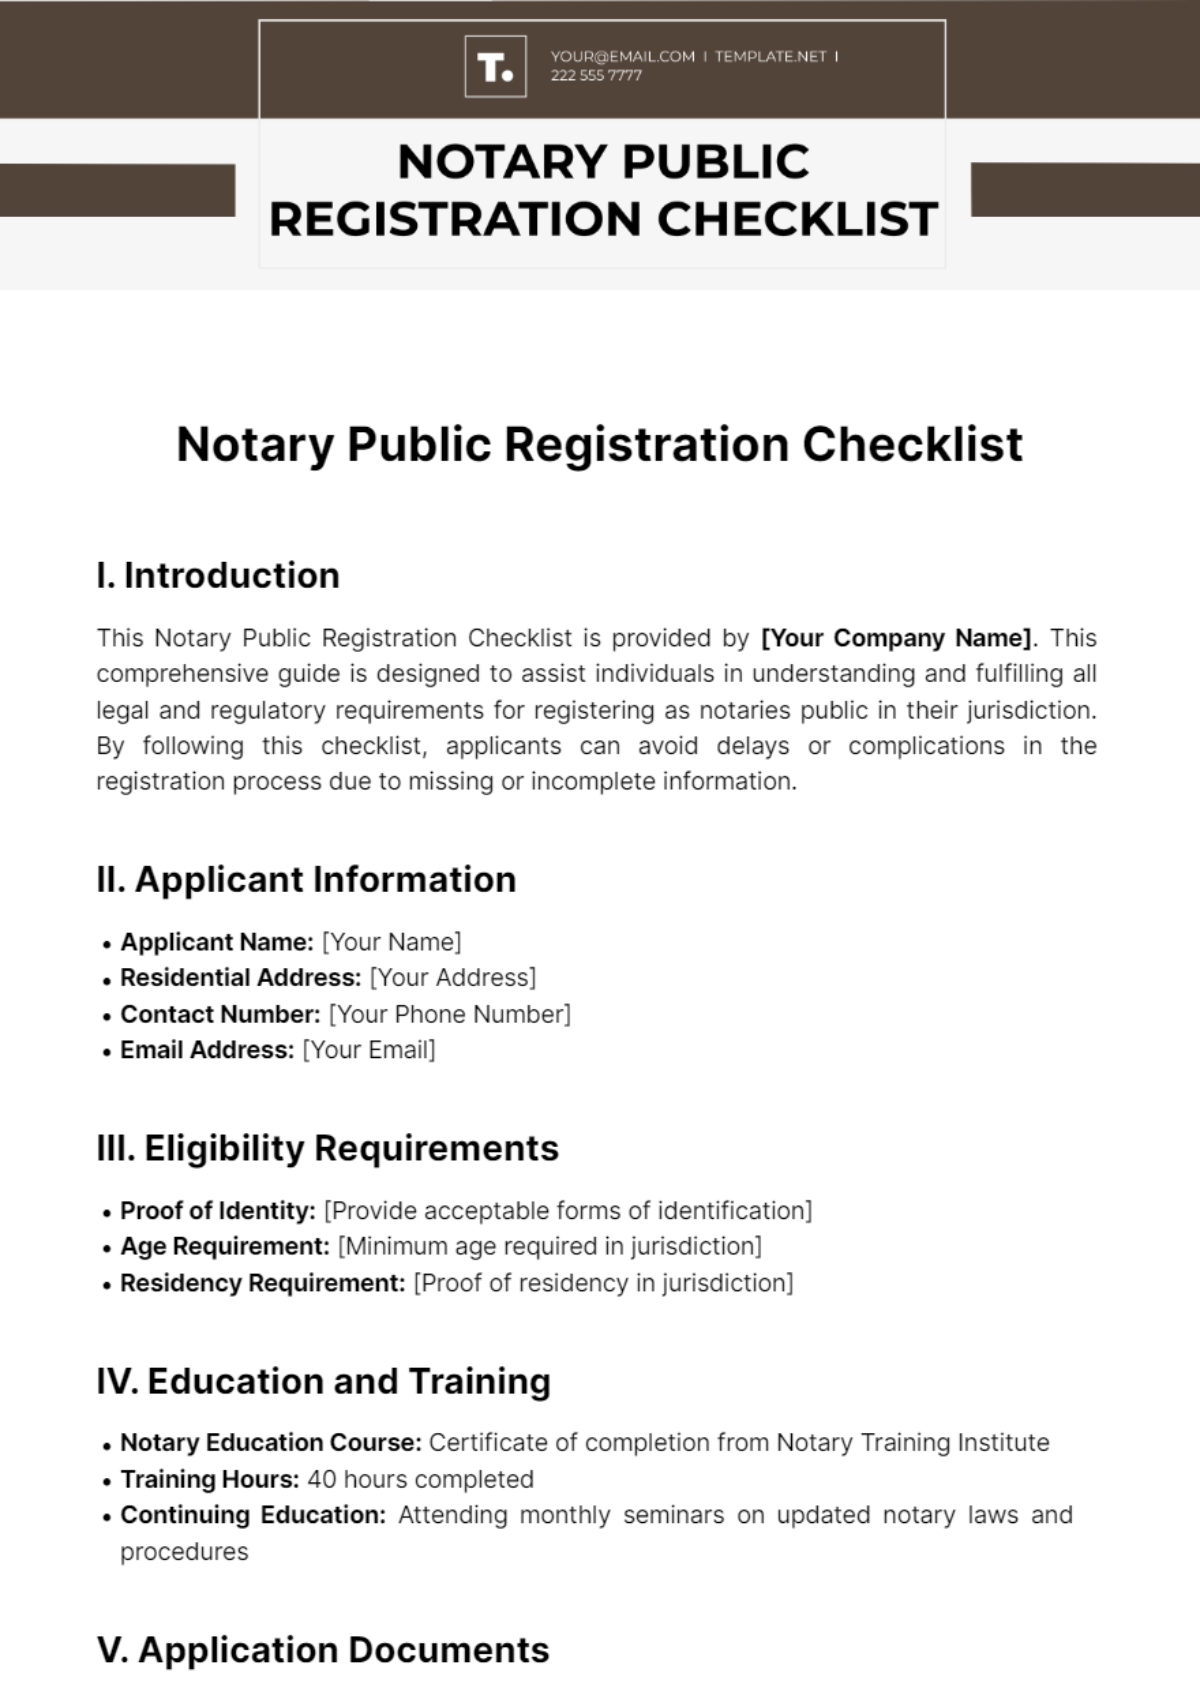 Notary Public Registration Checklist Template